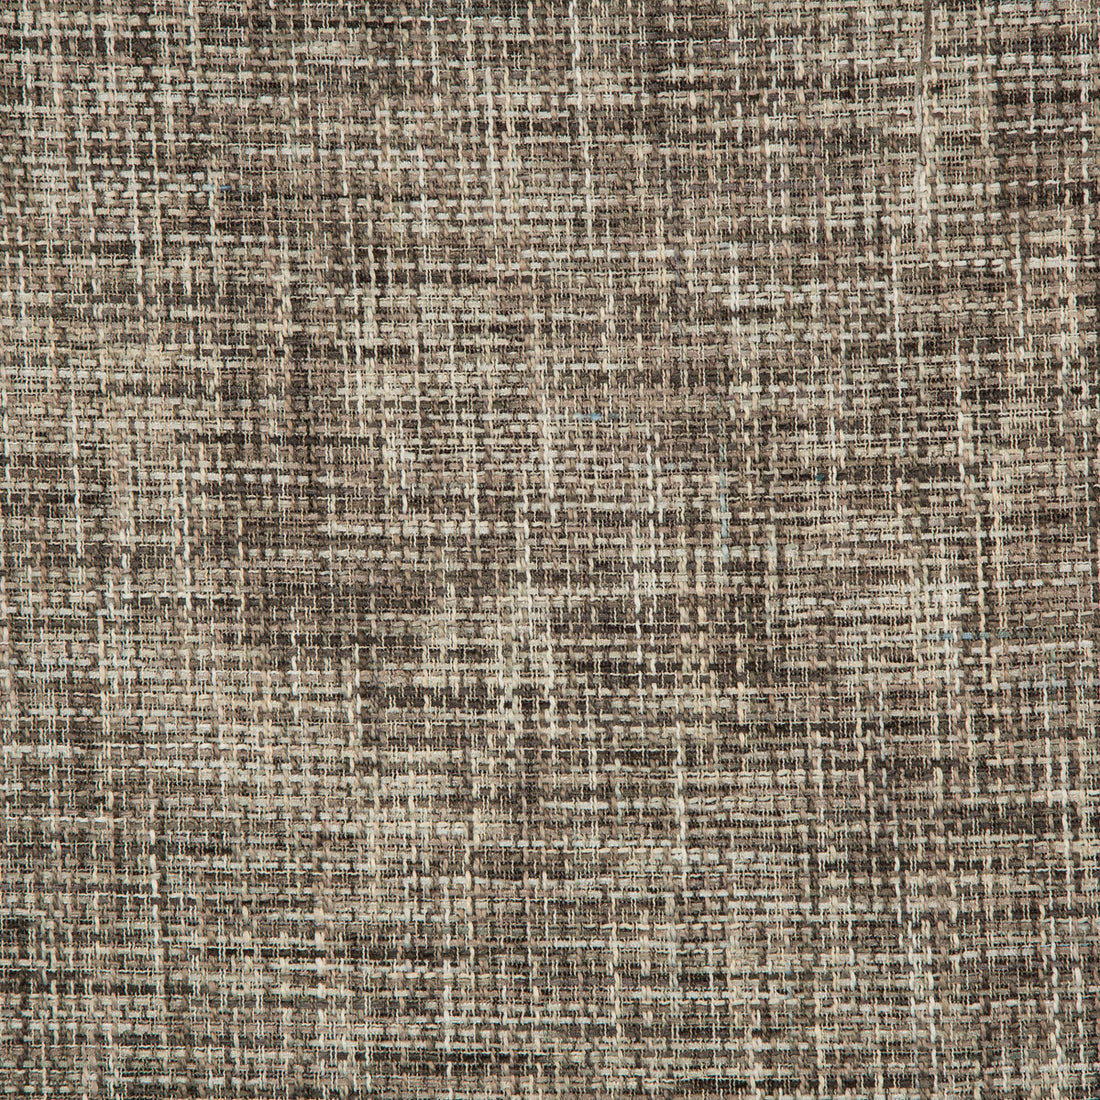 Kravet Smart fabric in 35928-1621 color - pattern 35928.1621.0 - by Kravet Smart in the Performance Kravetarmor collection